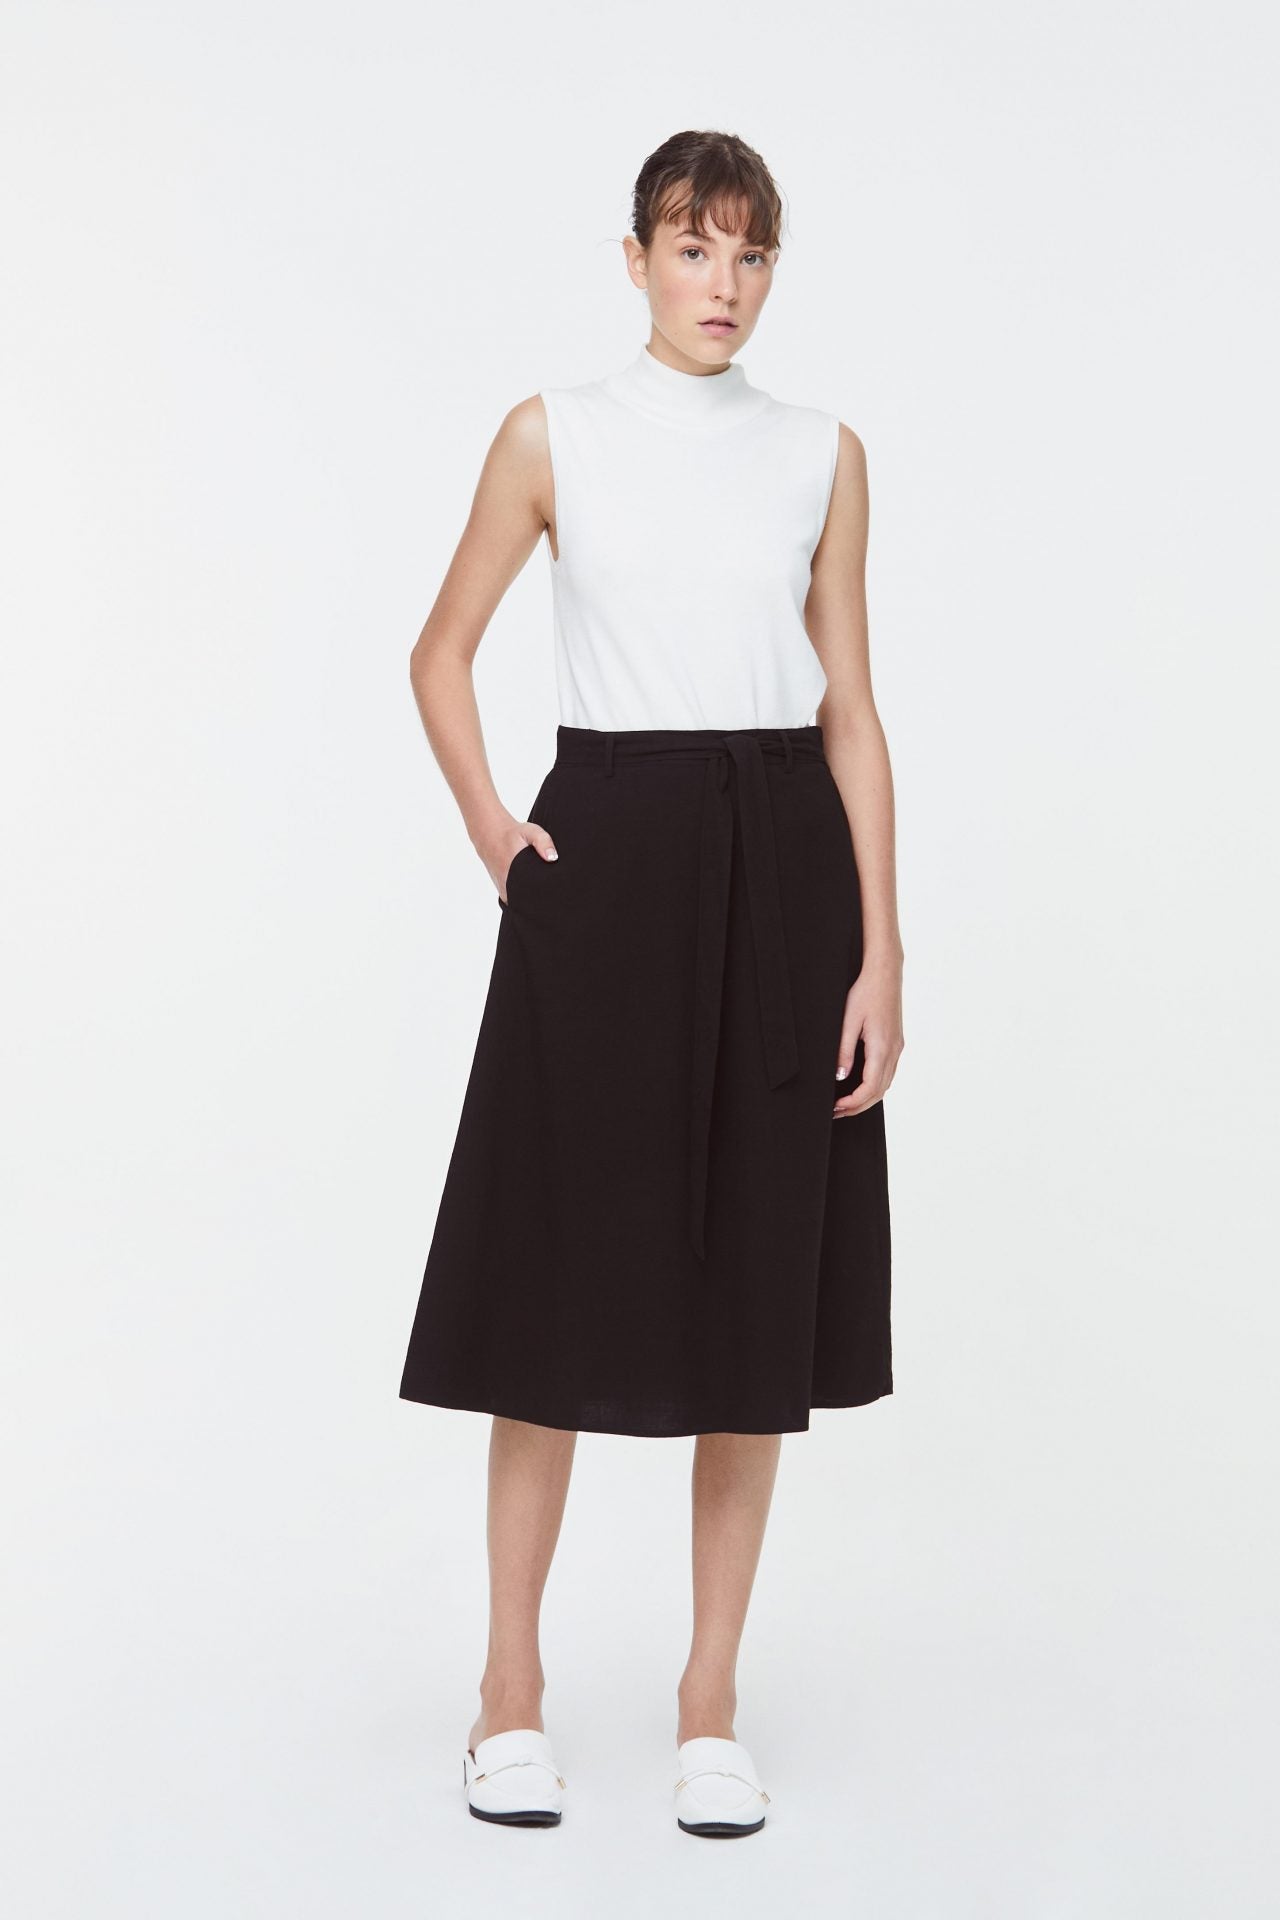 ASK 10762 Black Waist Tied Skirt